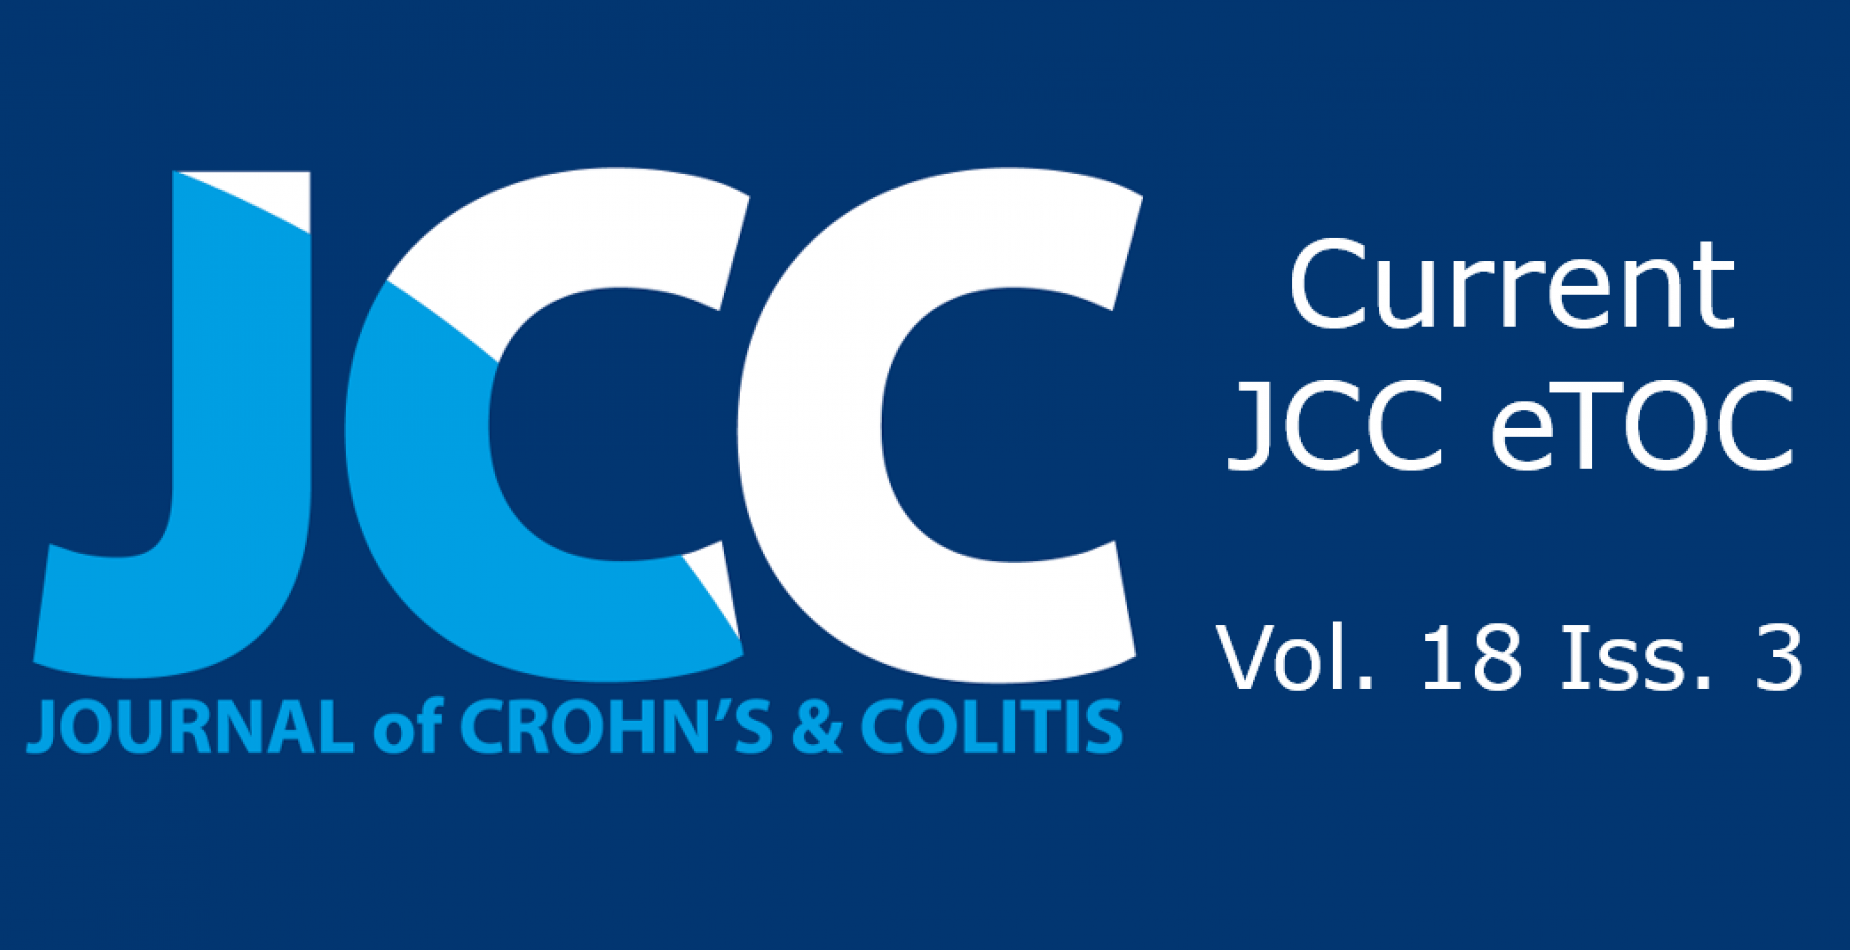 Current JCC eTOC Vol. 18 Iss. 3